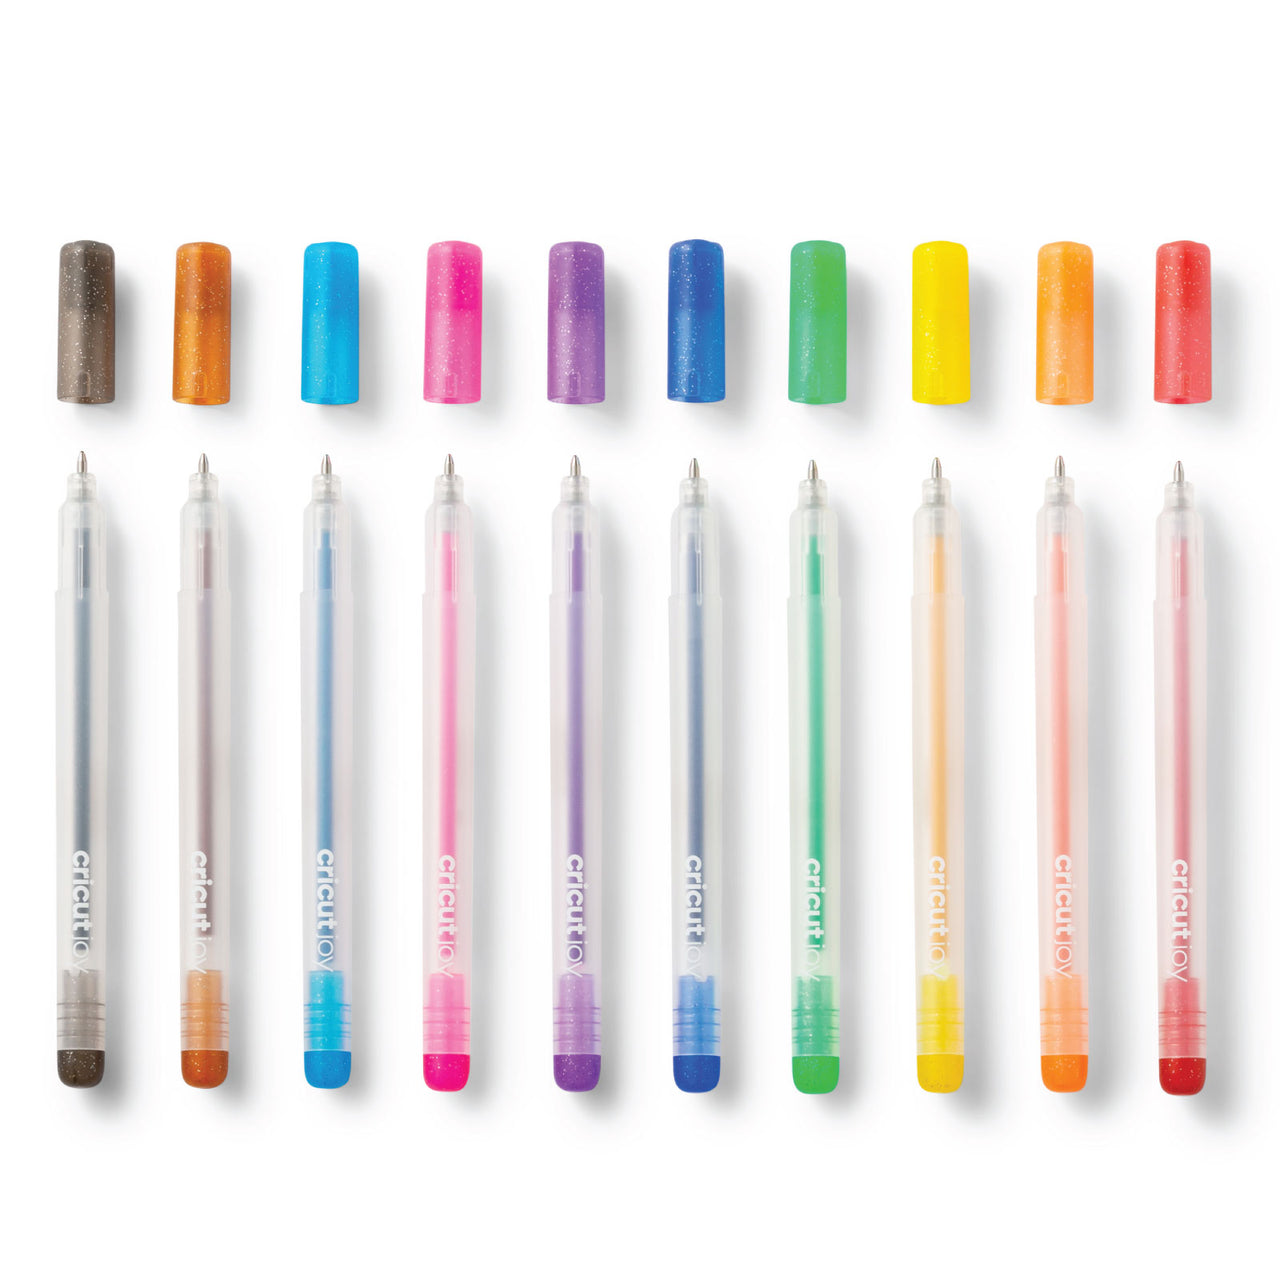 Cricut Joy Glitter Gel Pens 0.8 mm, Rainbow 10 ct - Damaged Package